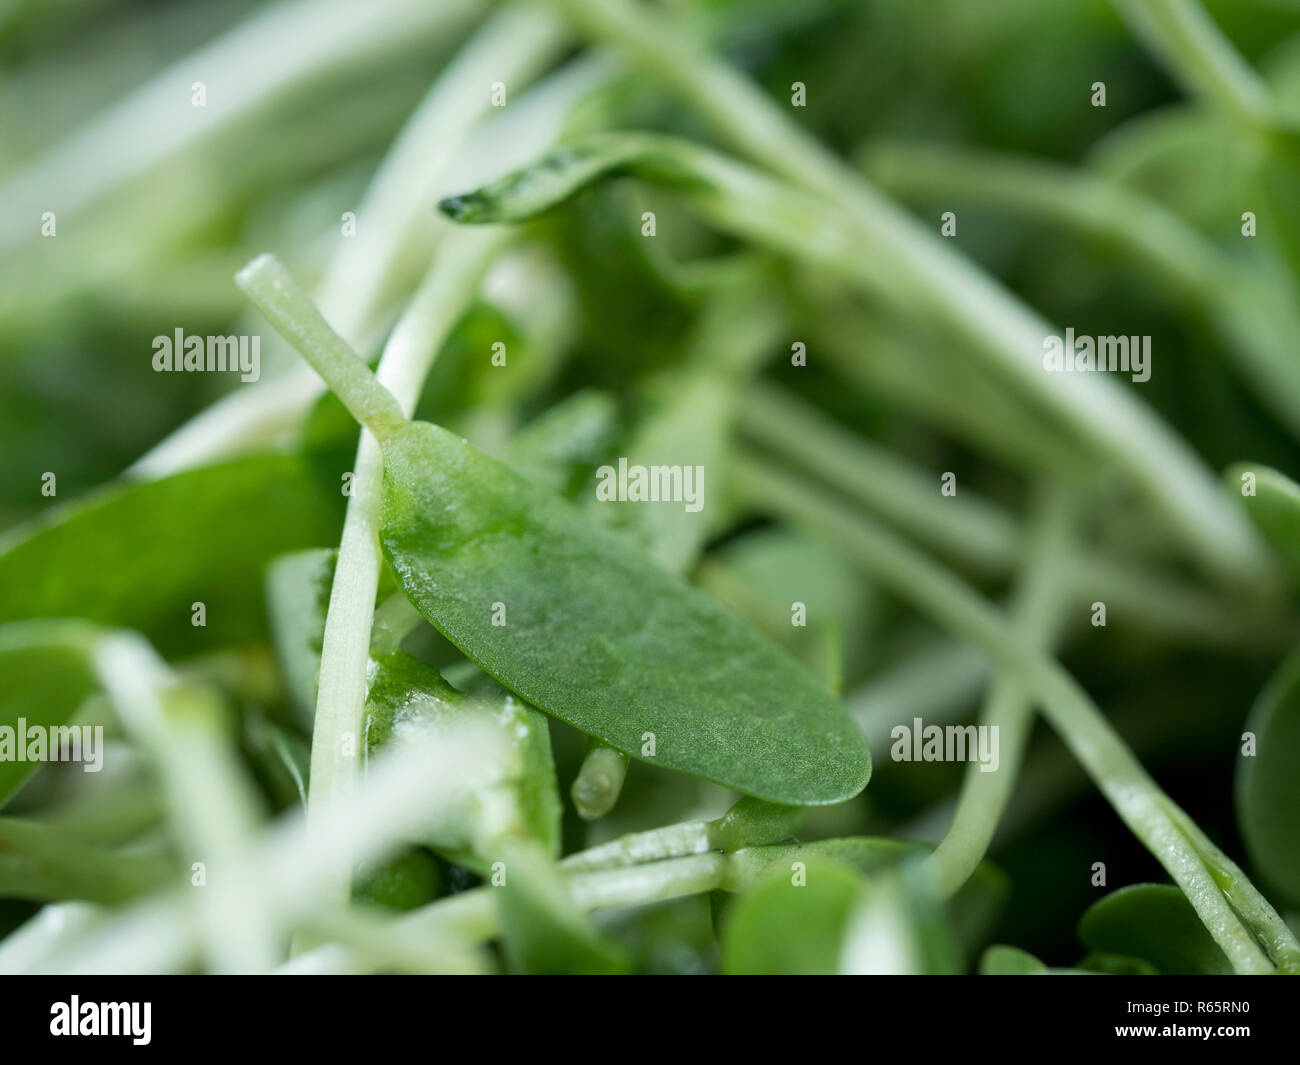 Extreme close up of fenugreek leaf (Trigonella foenum-graecum) in bowl of washed fenugreek shoots Stock Photo